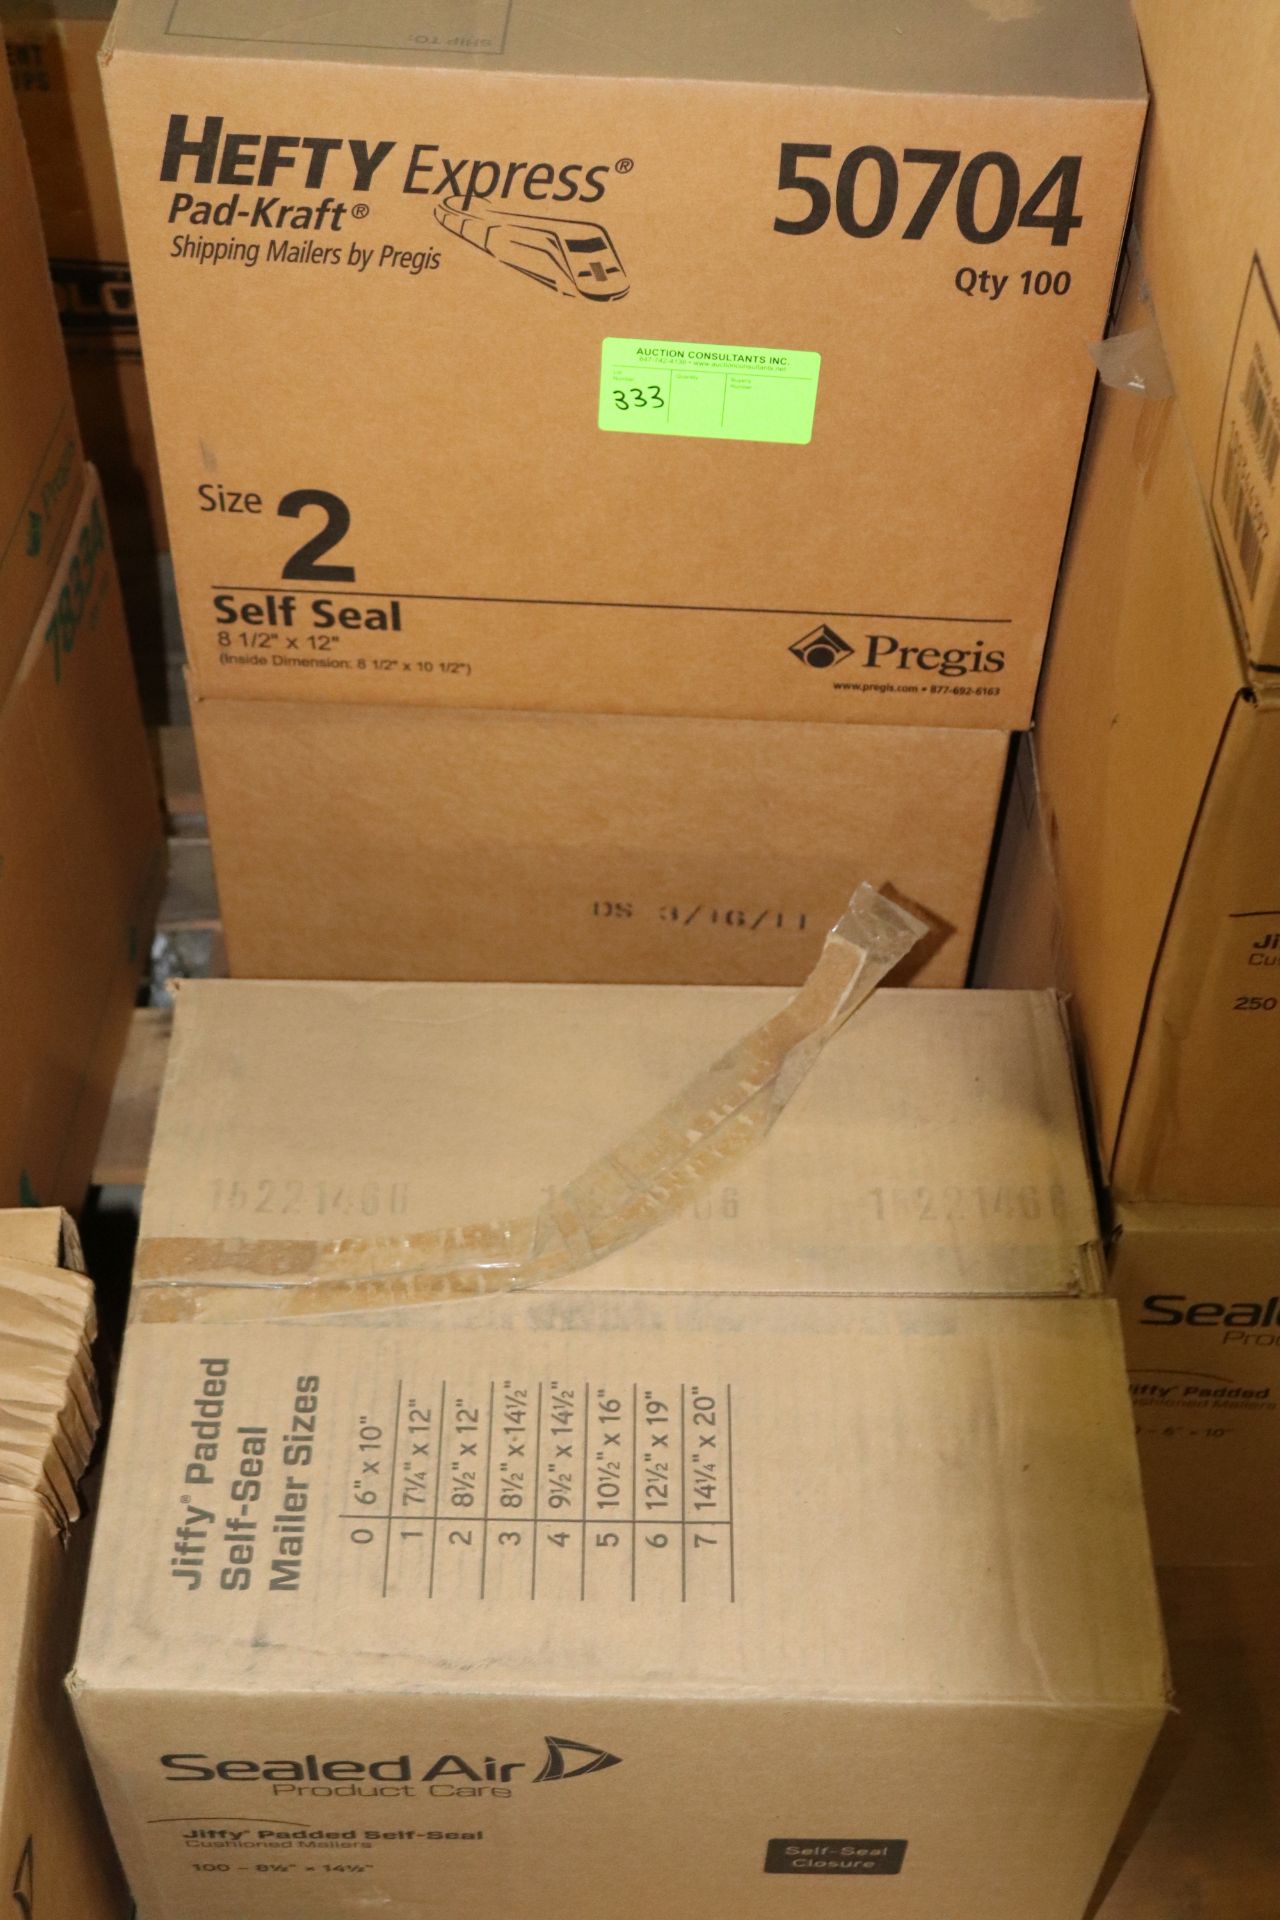 Three boxes of size 2 self seal envelopes, 8-1/2" x 12", 100 each,